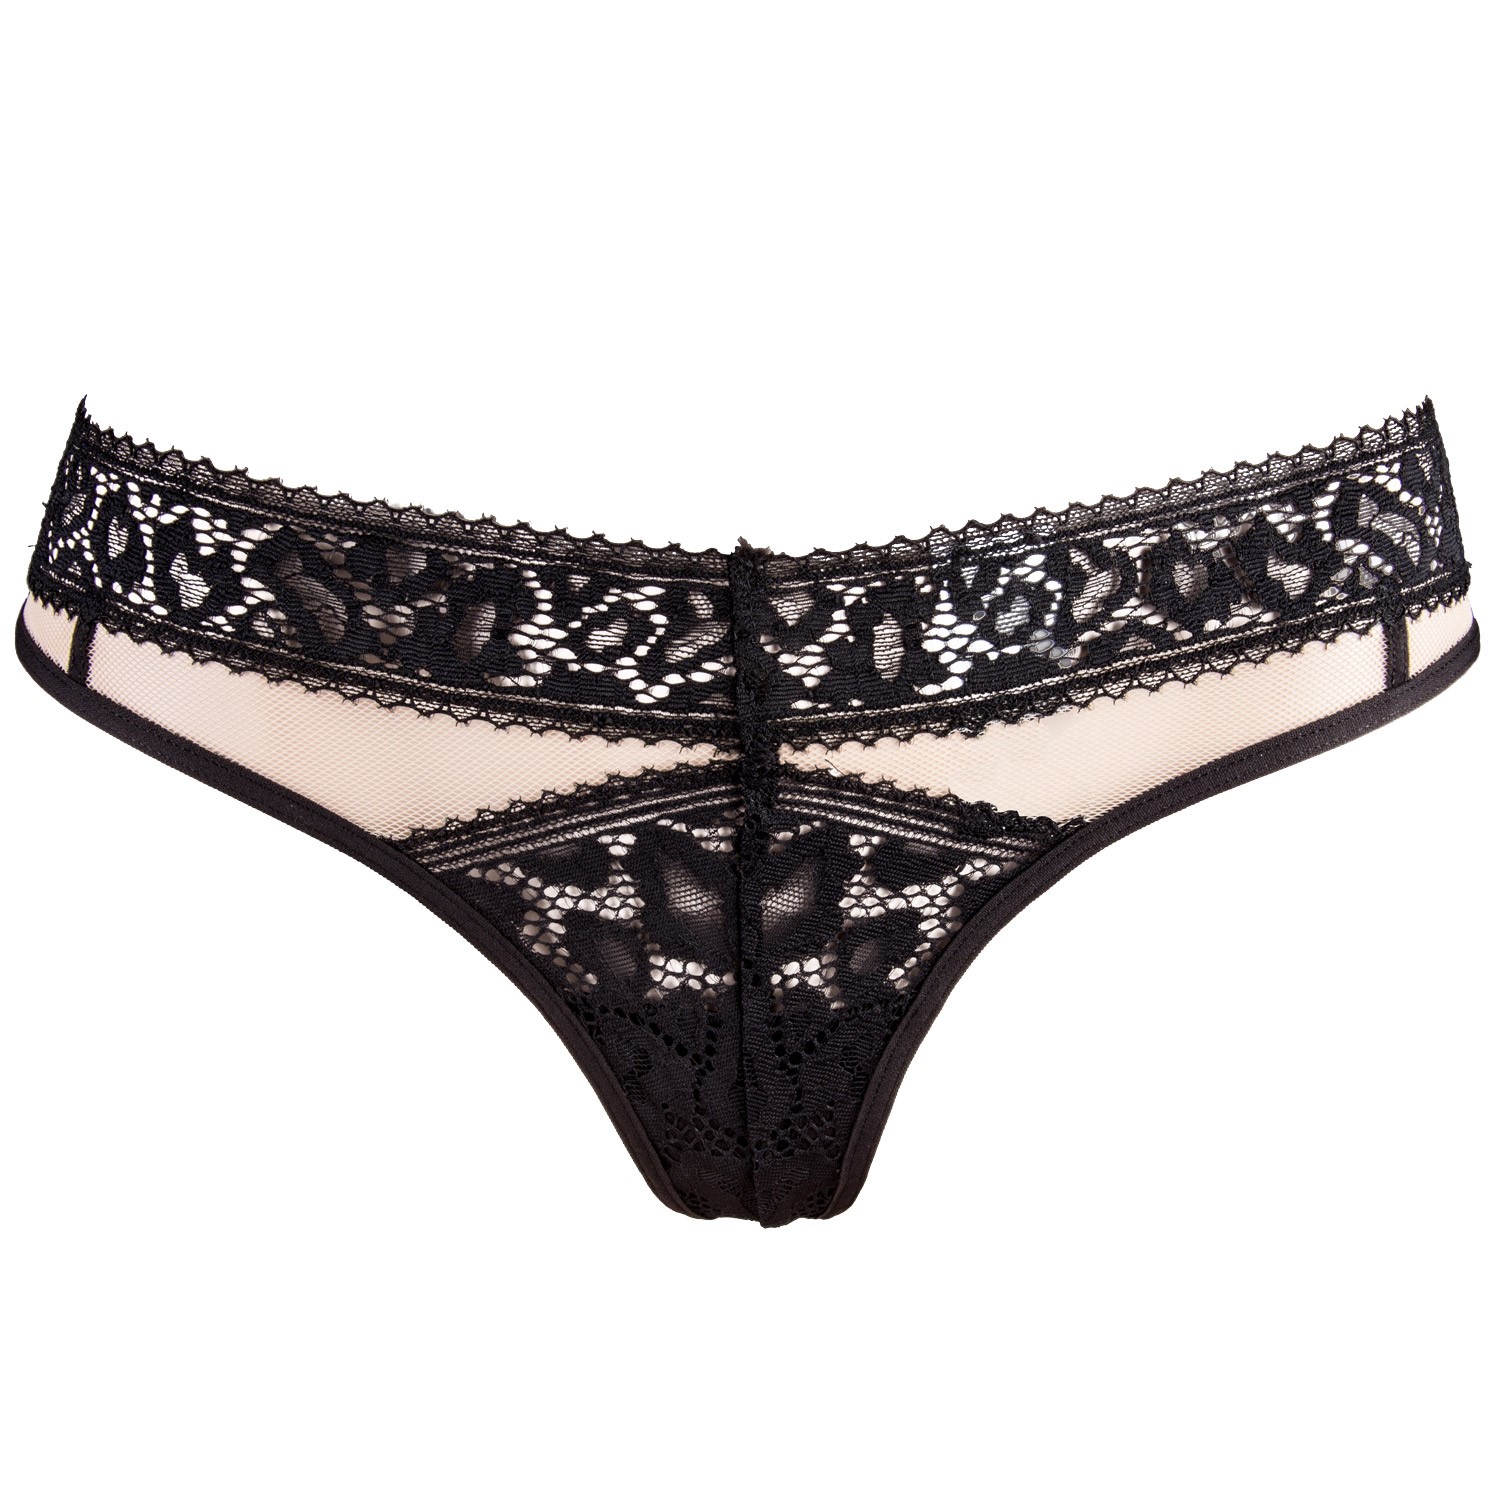 Calvin Klein Tease Thong - Thong - Briefs - Underwear - Timarco.co.uk